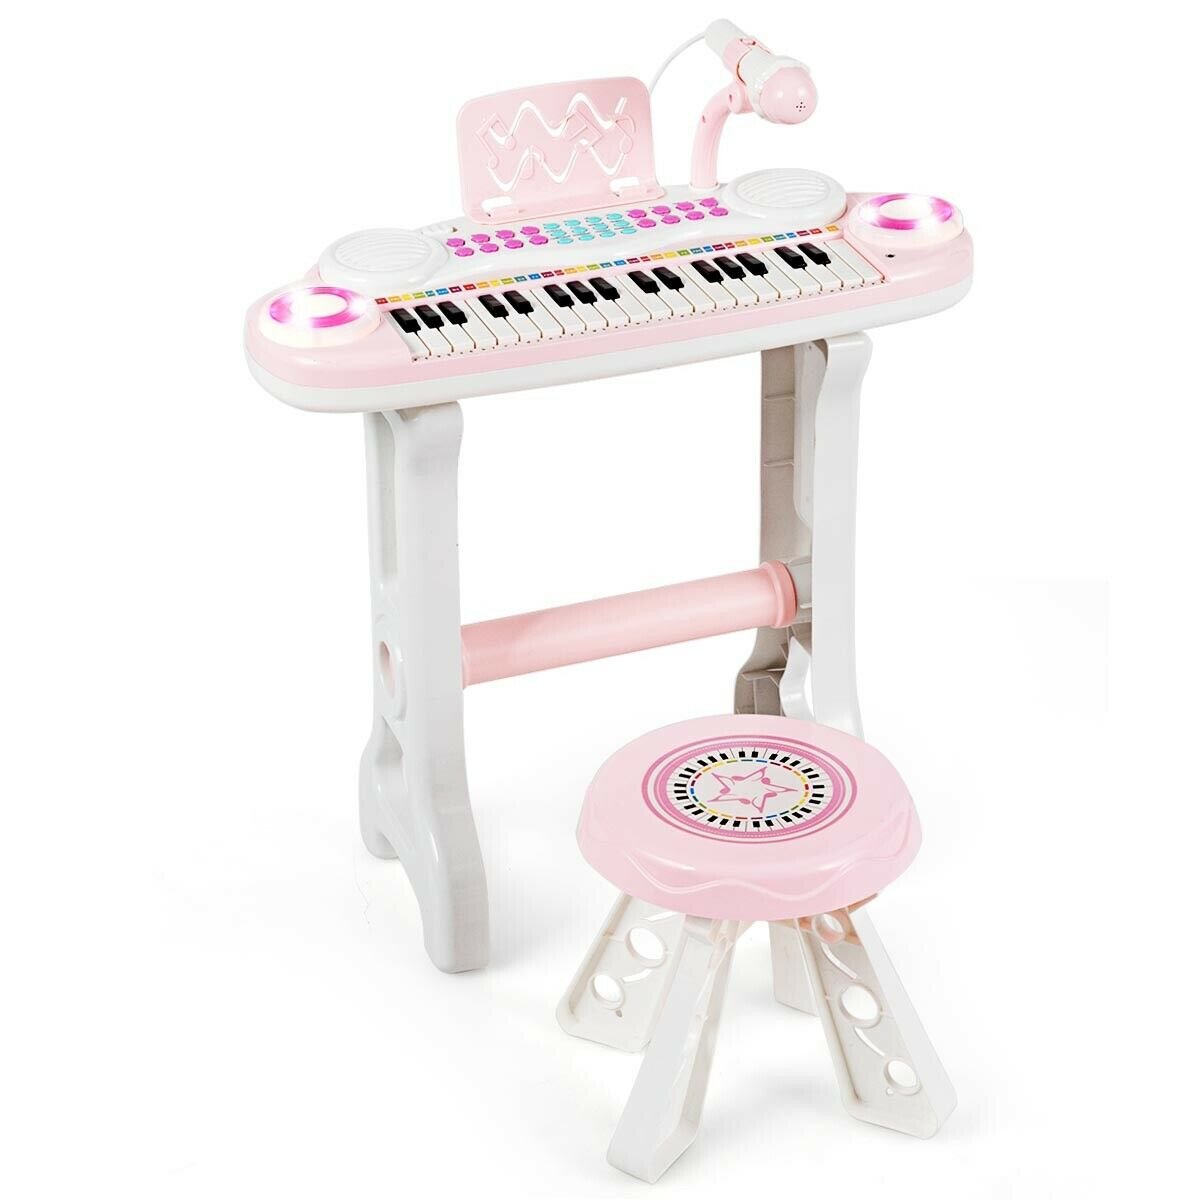 37-key Kids Electronic Piano Keyboard Playset, Pink